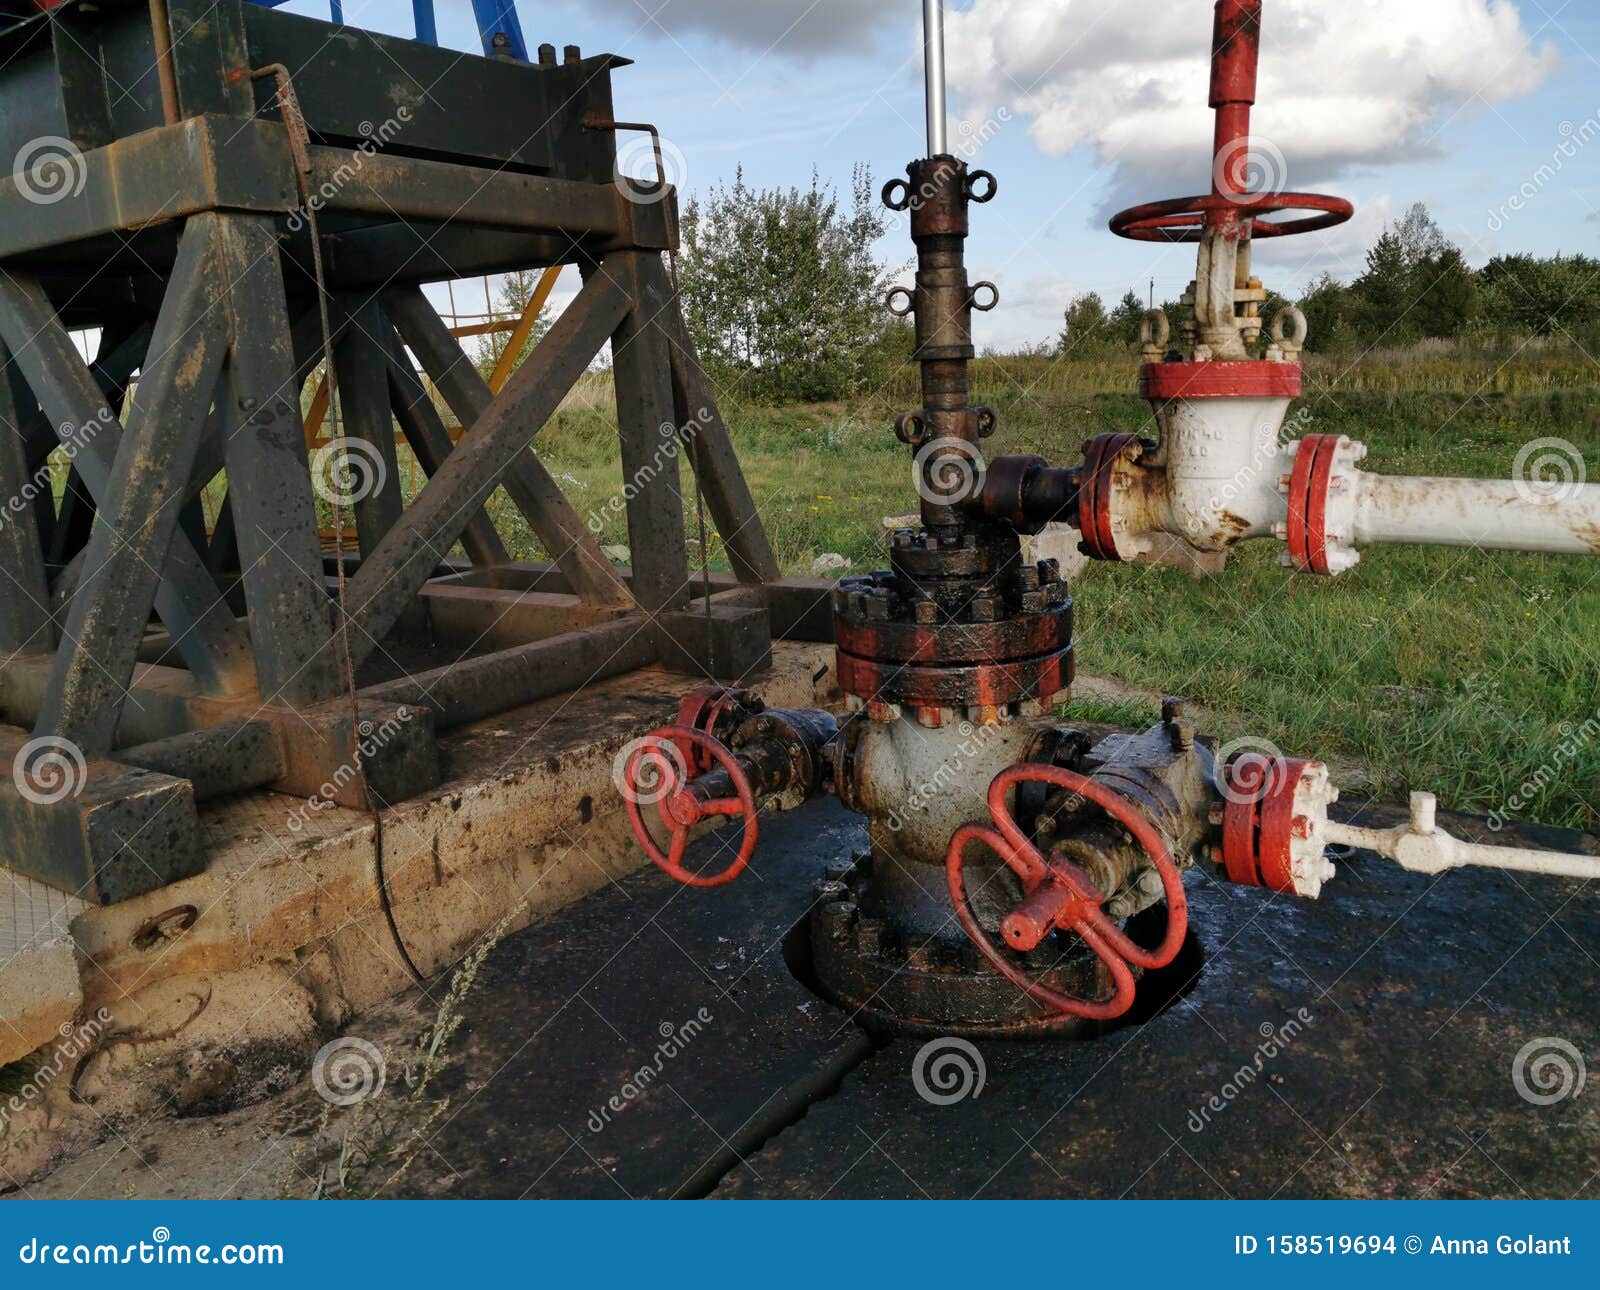 Oilfield Equipment Stock Illustration - Image: 44883807